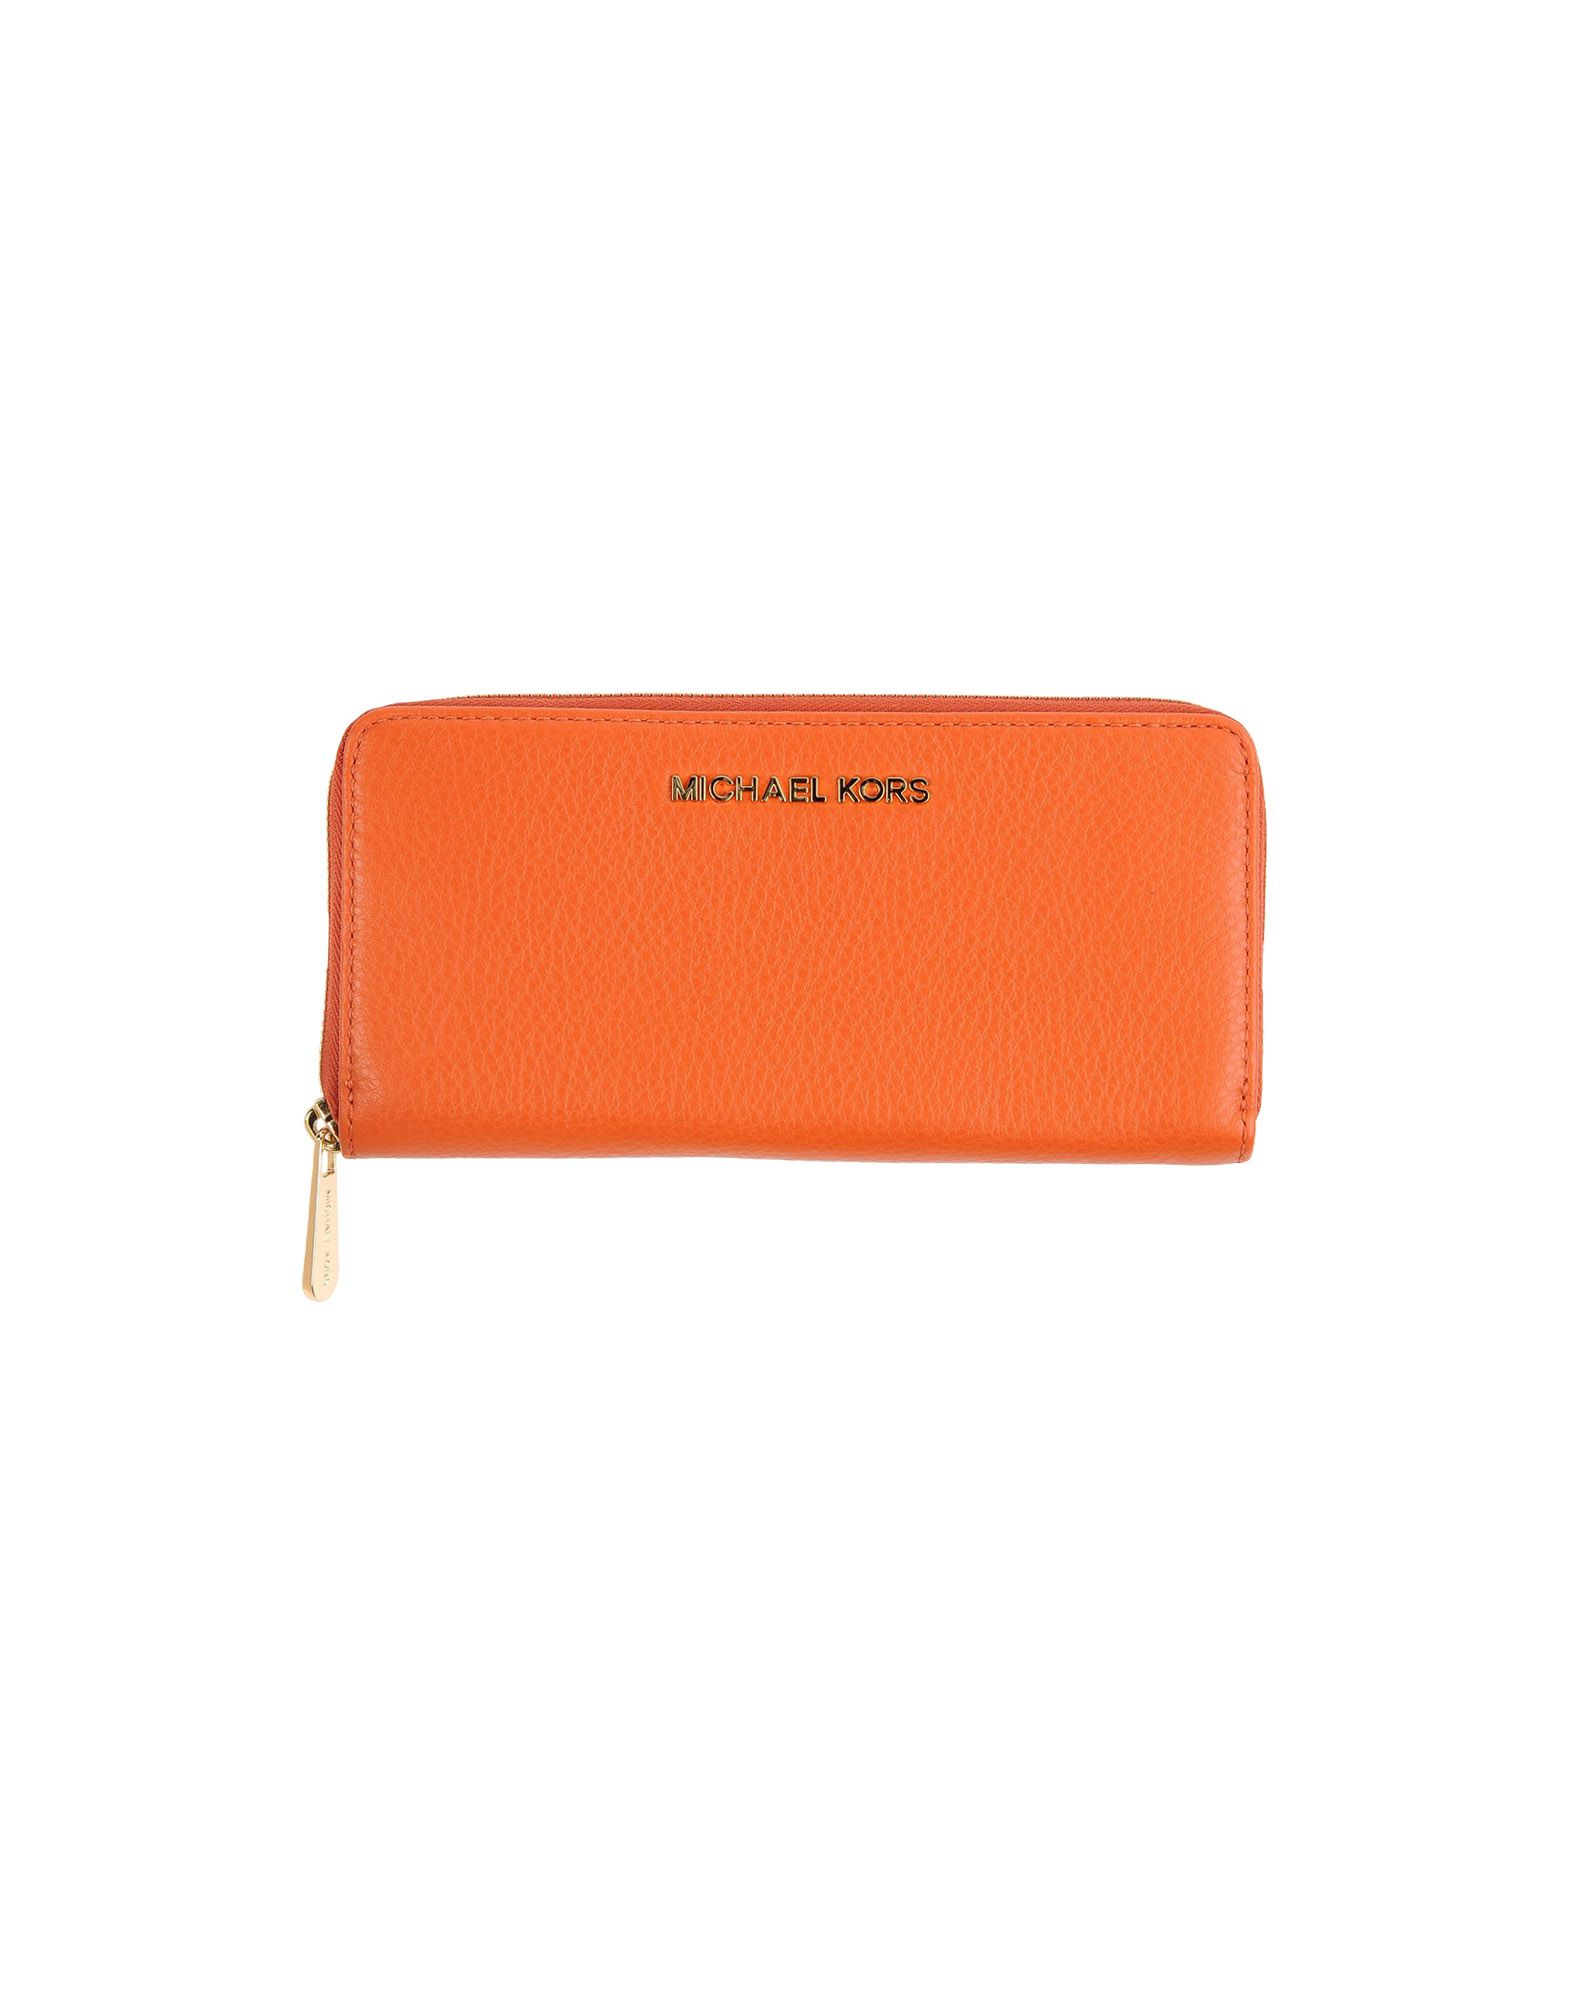 Michael kors Wallet in Orange | Lyst